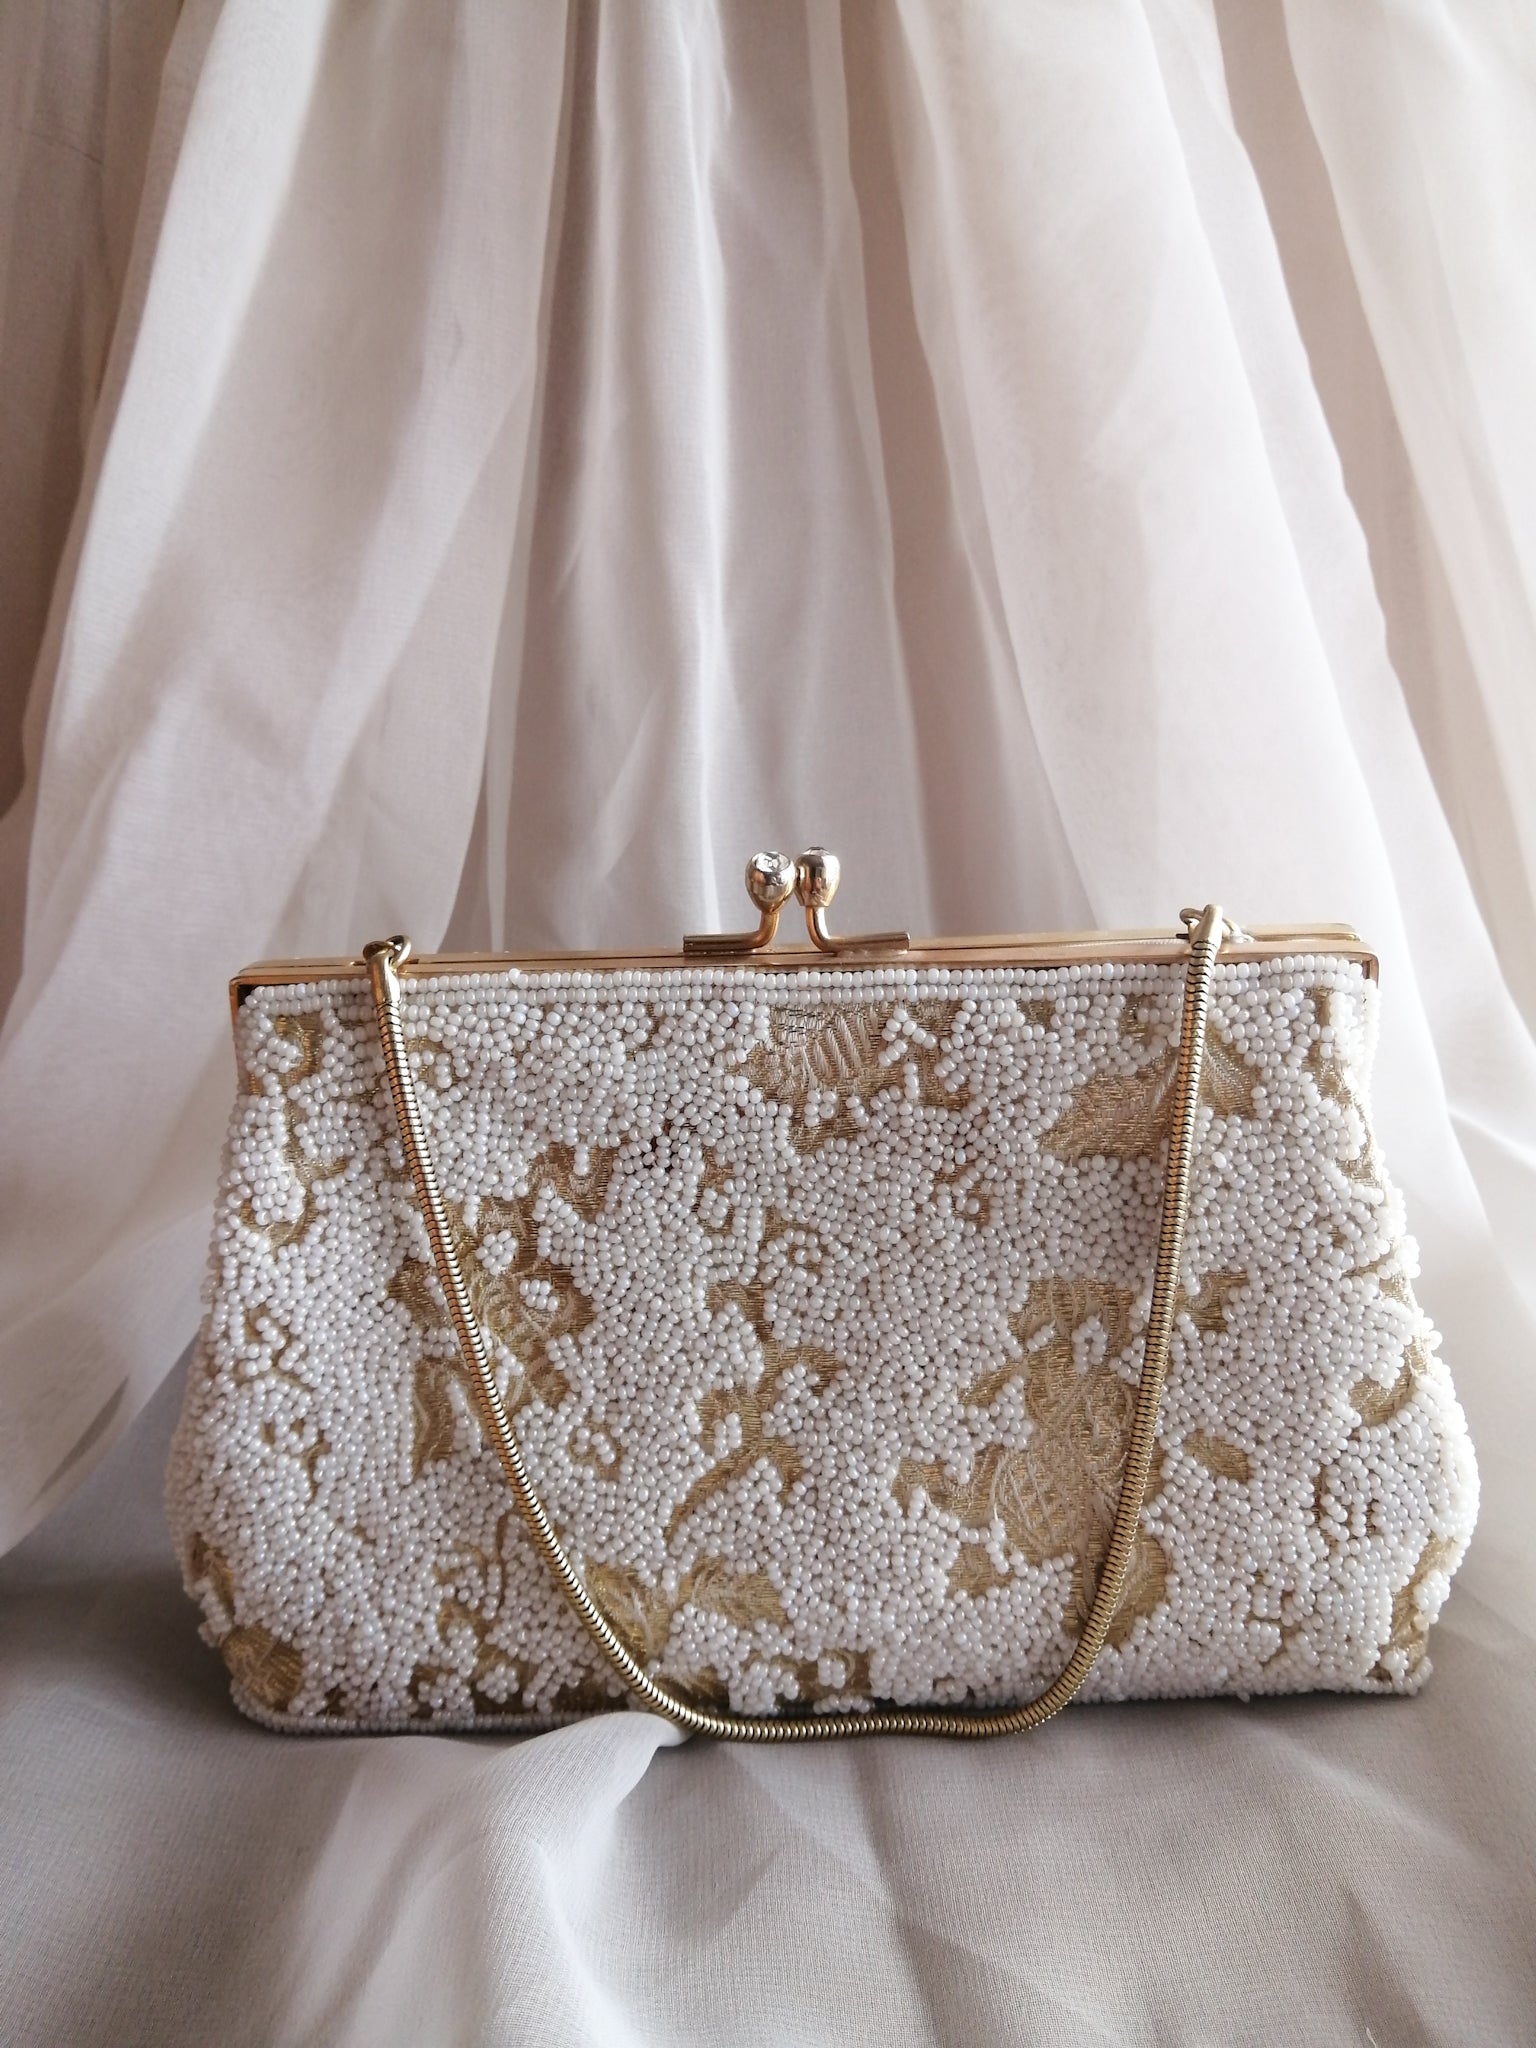 White & gold beaded clutch handbag